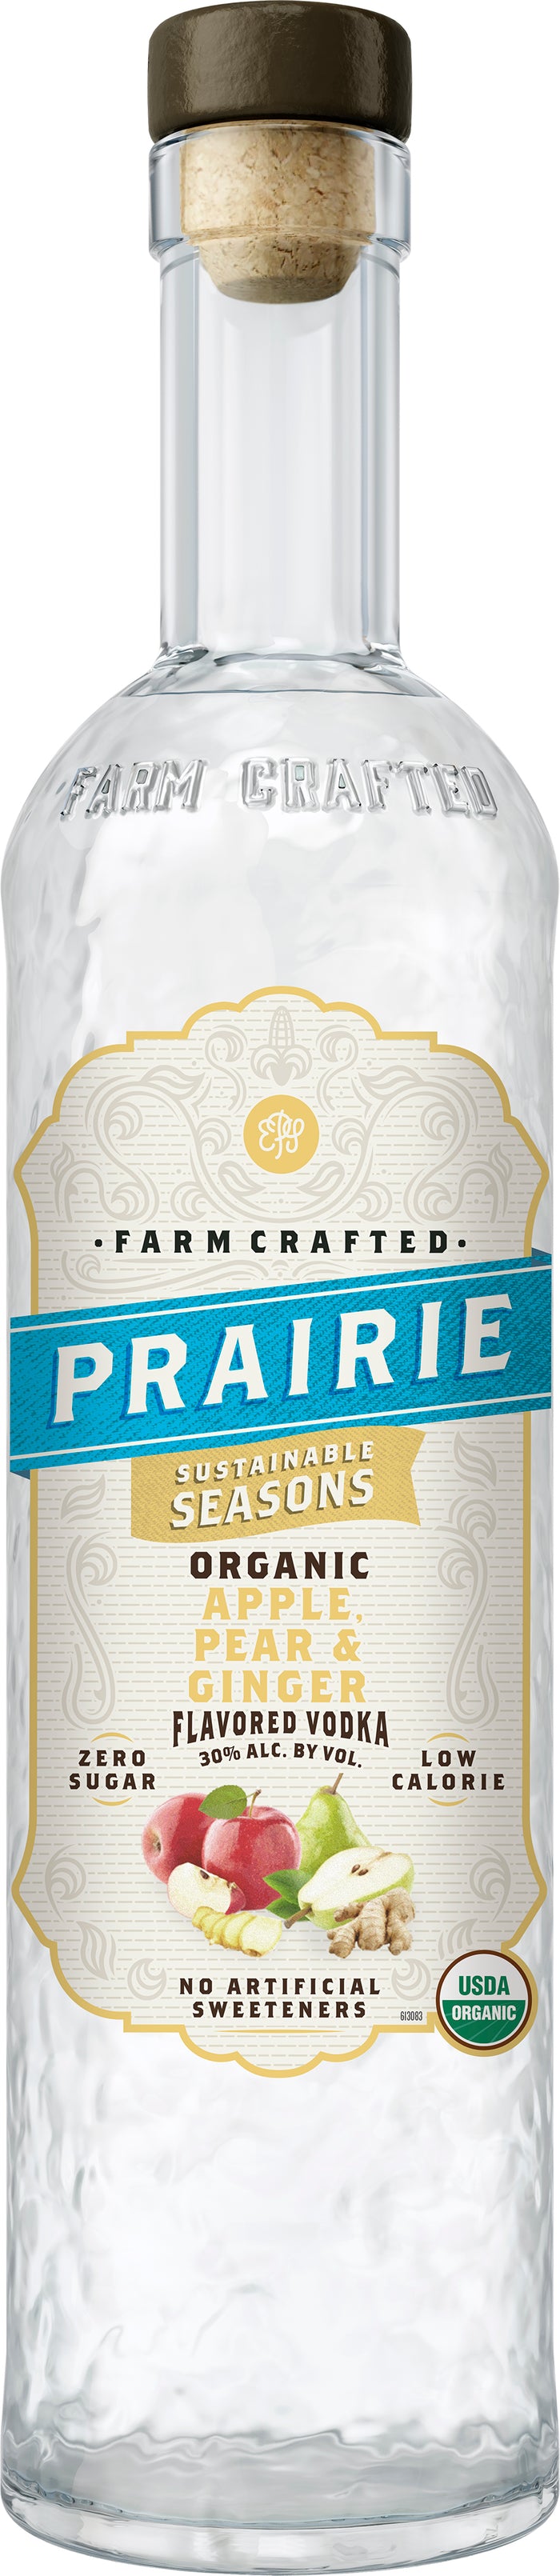 Prairie Organic Sustainable Apple Pear & Ginger Vodka